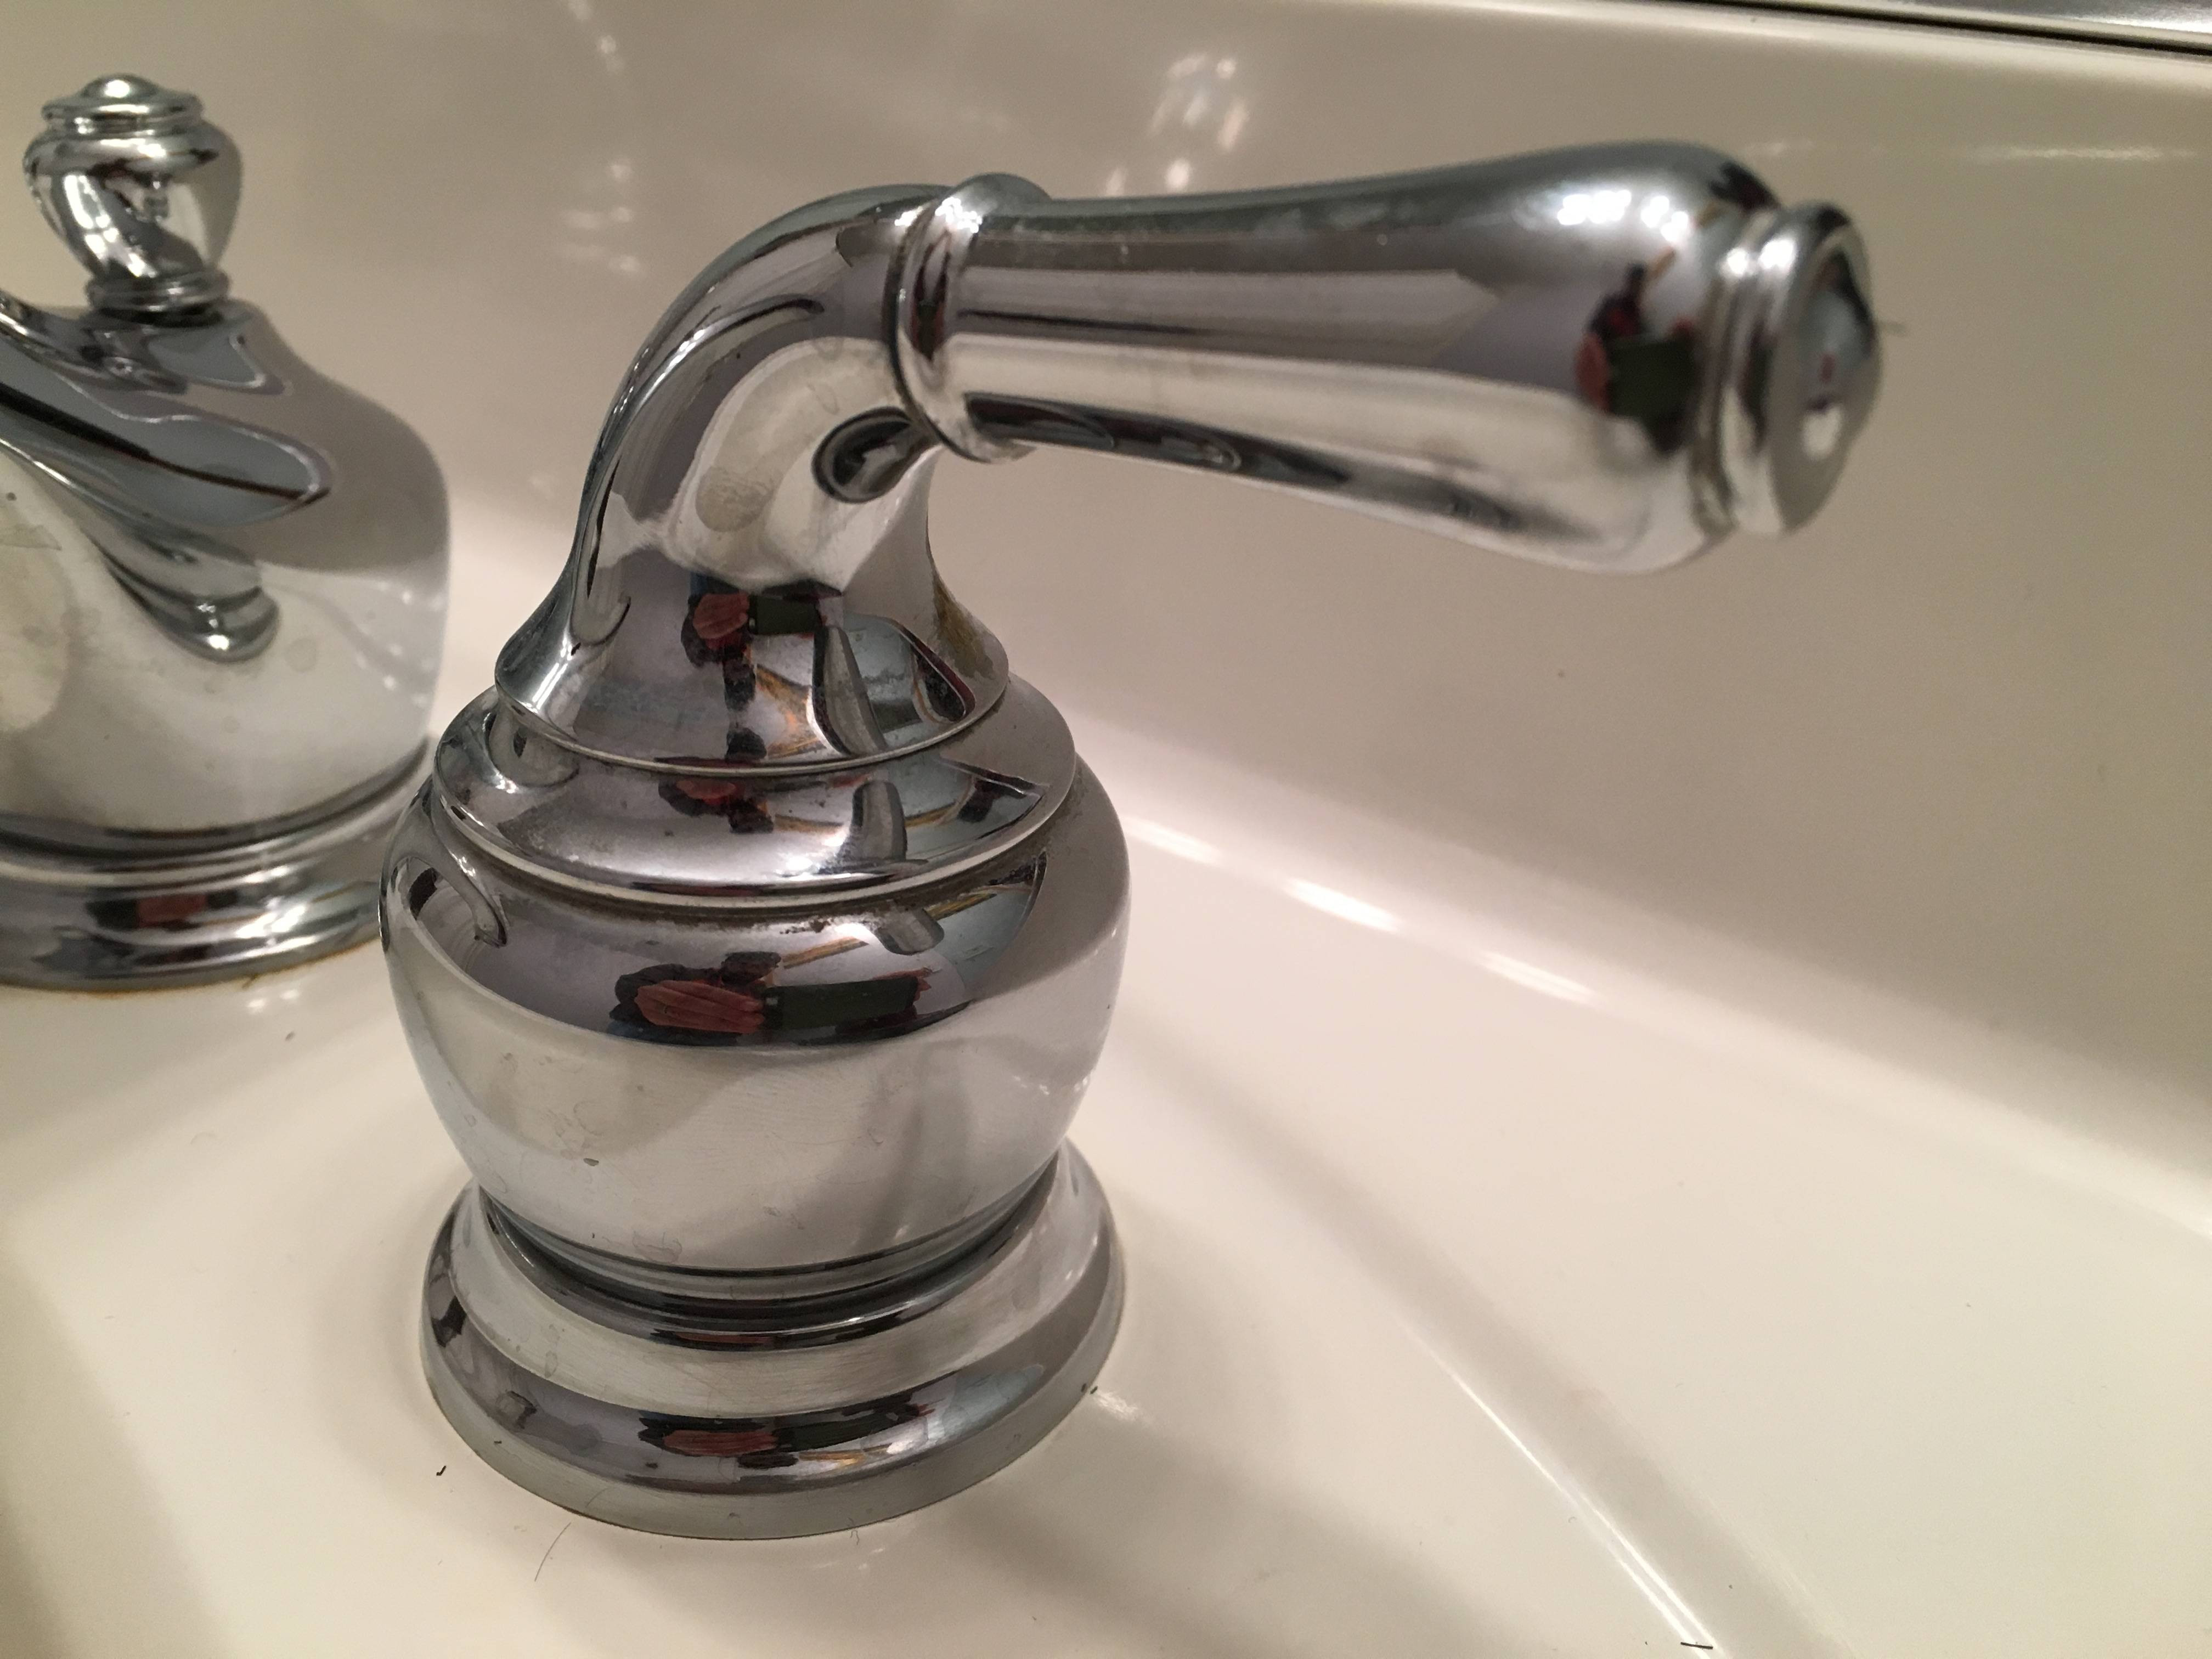 tightening bathroom sink faucet